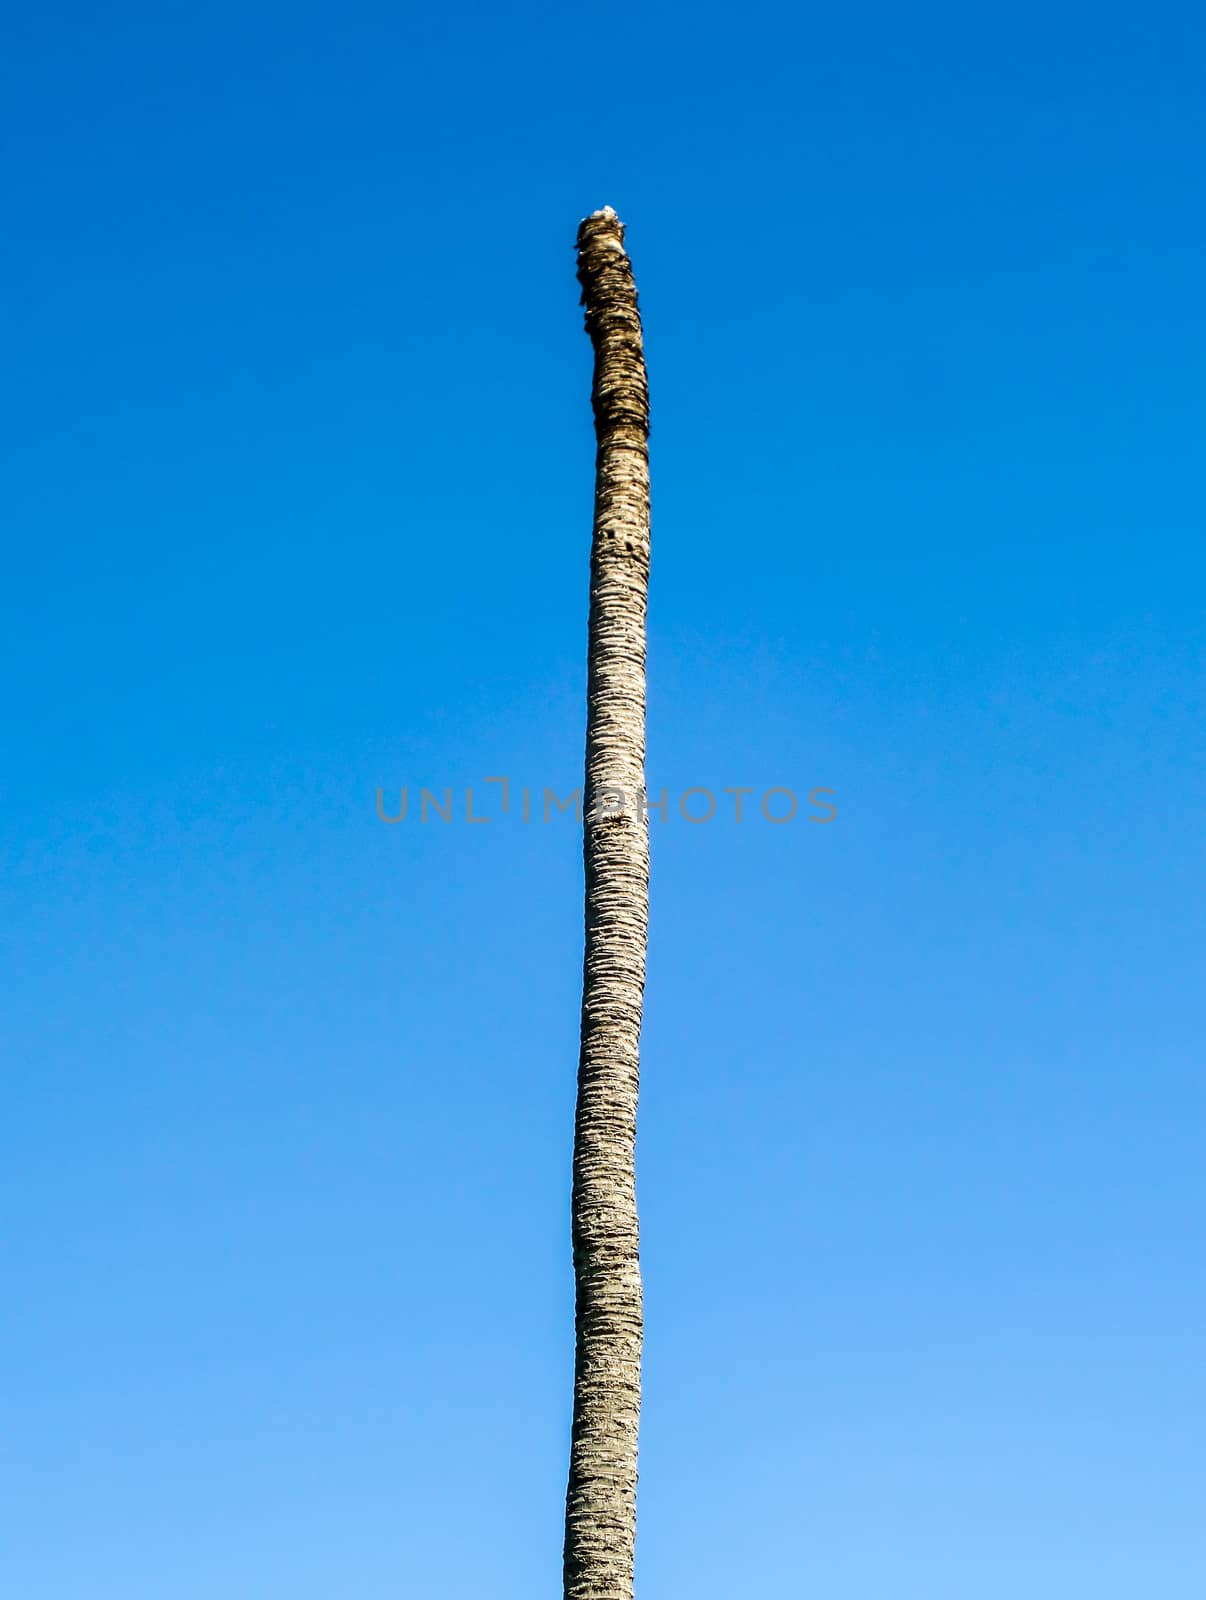 Dead coconut in blue sky at garden